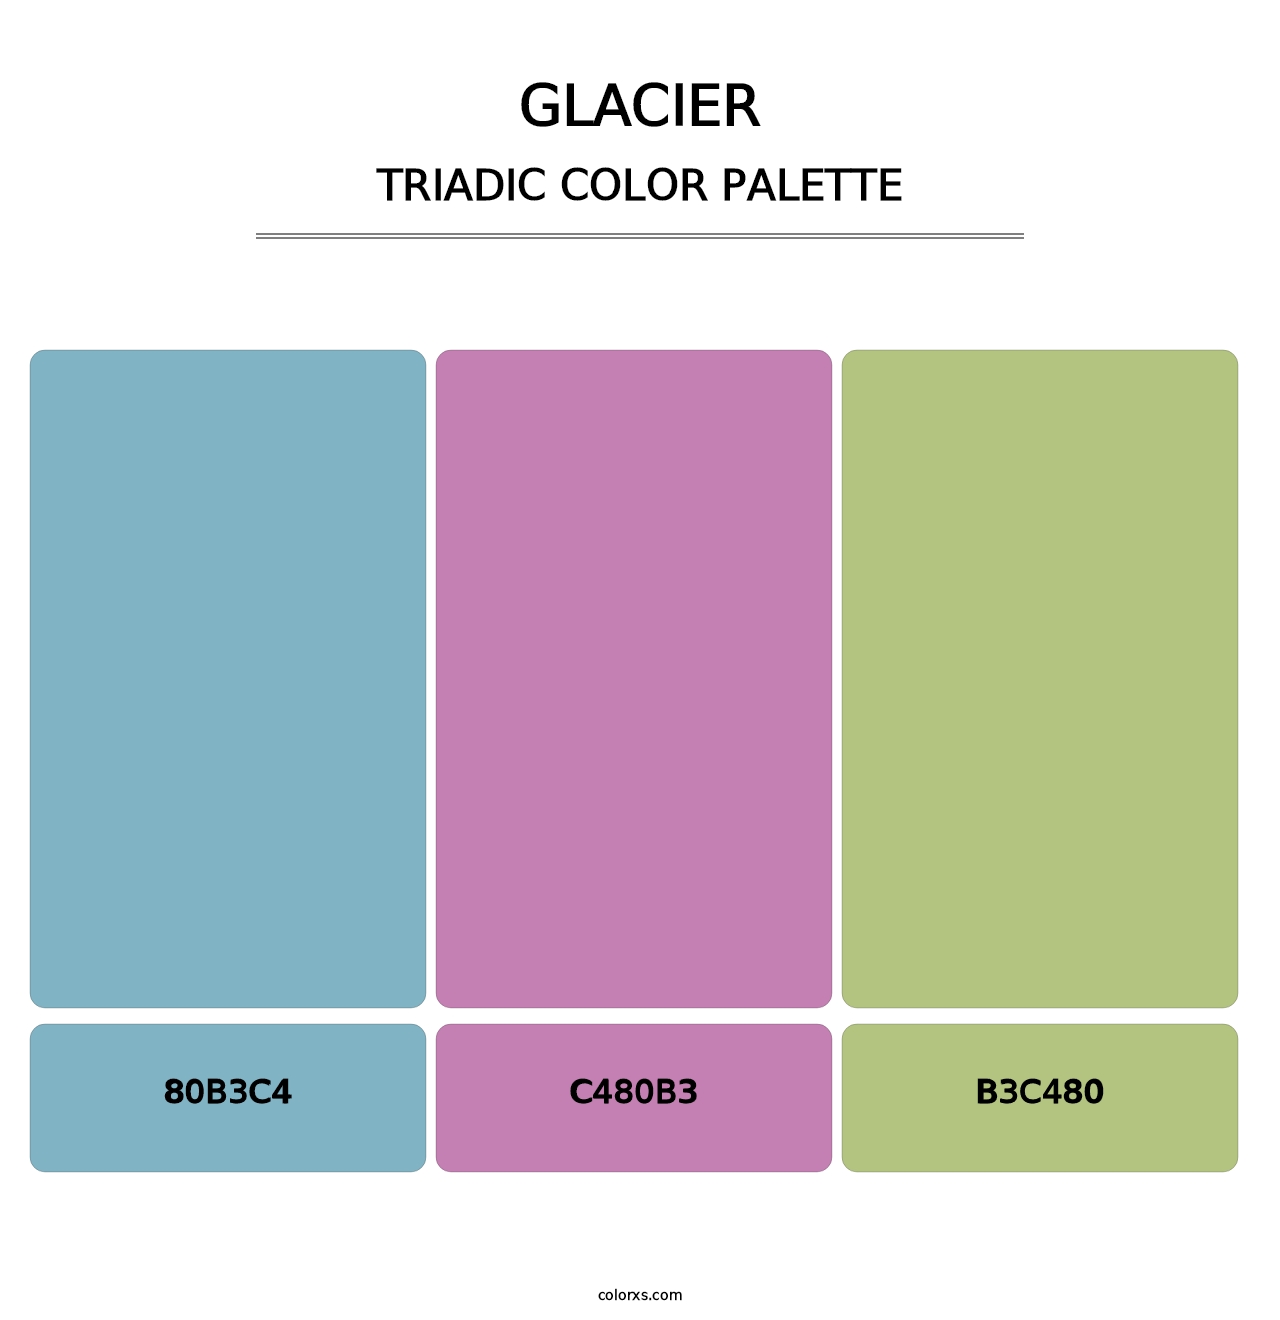 Glacier - Triadic Color Palette